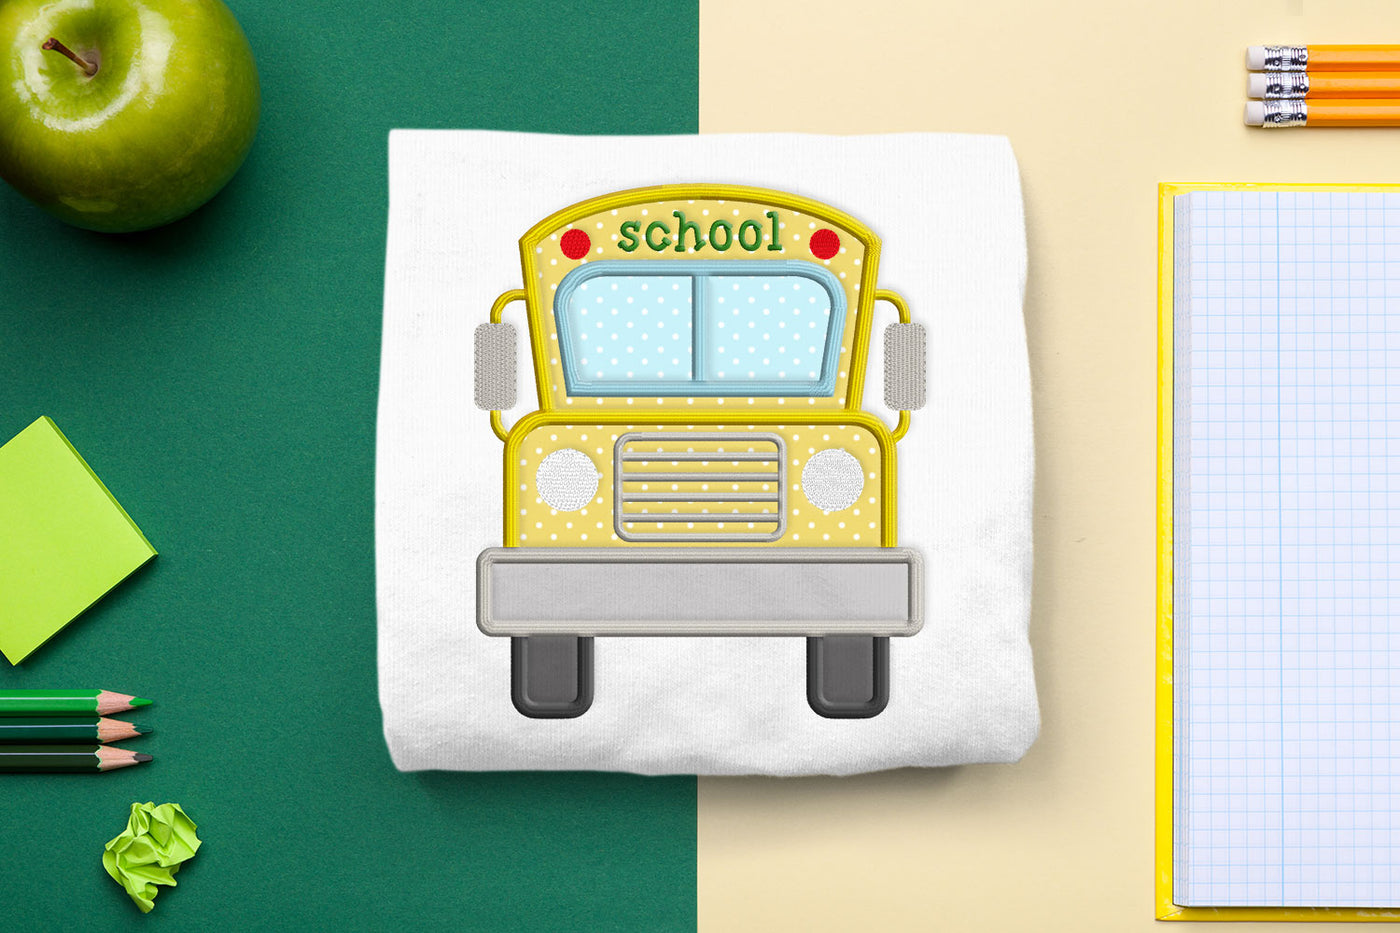 School bus front applique embroidery design file